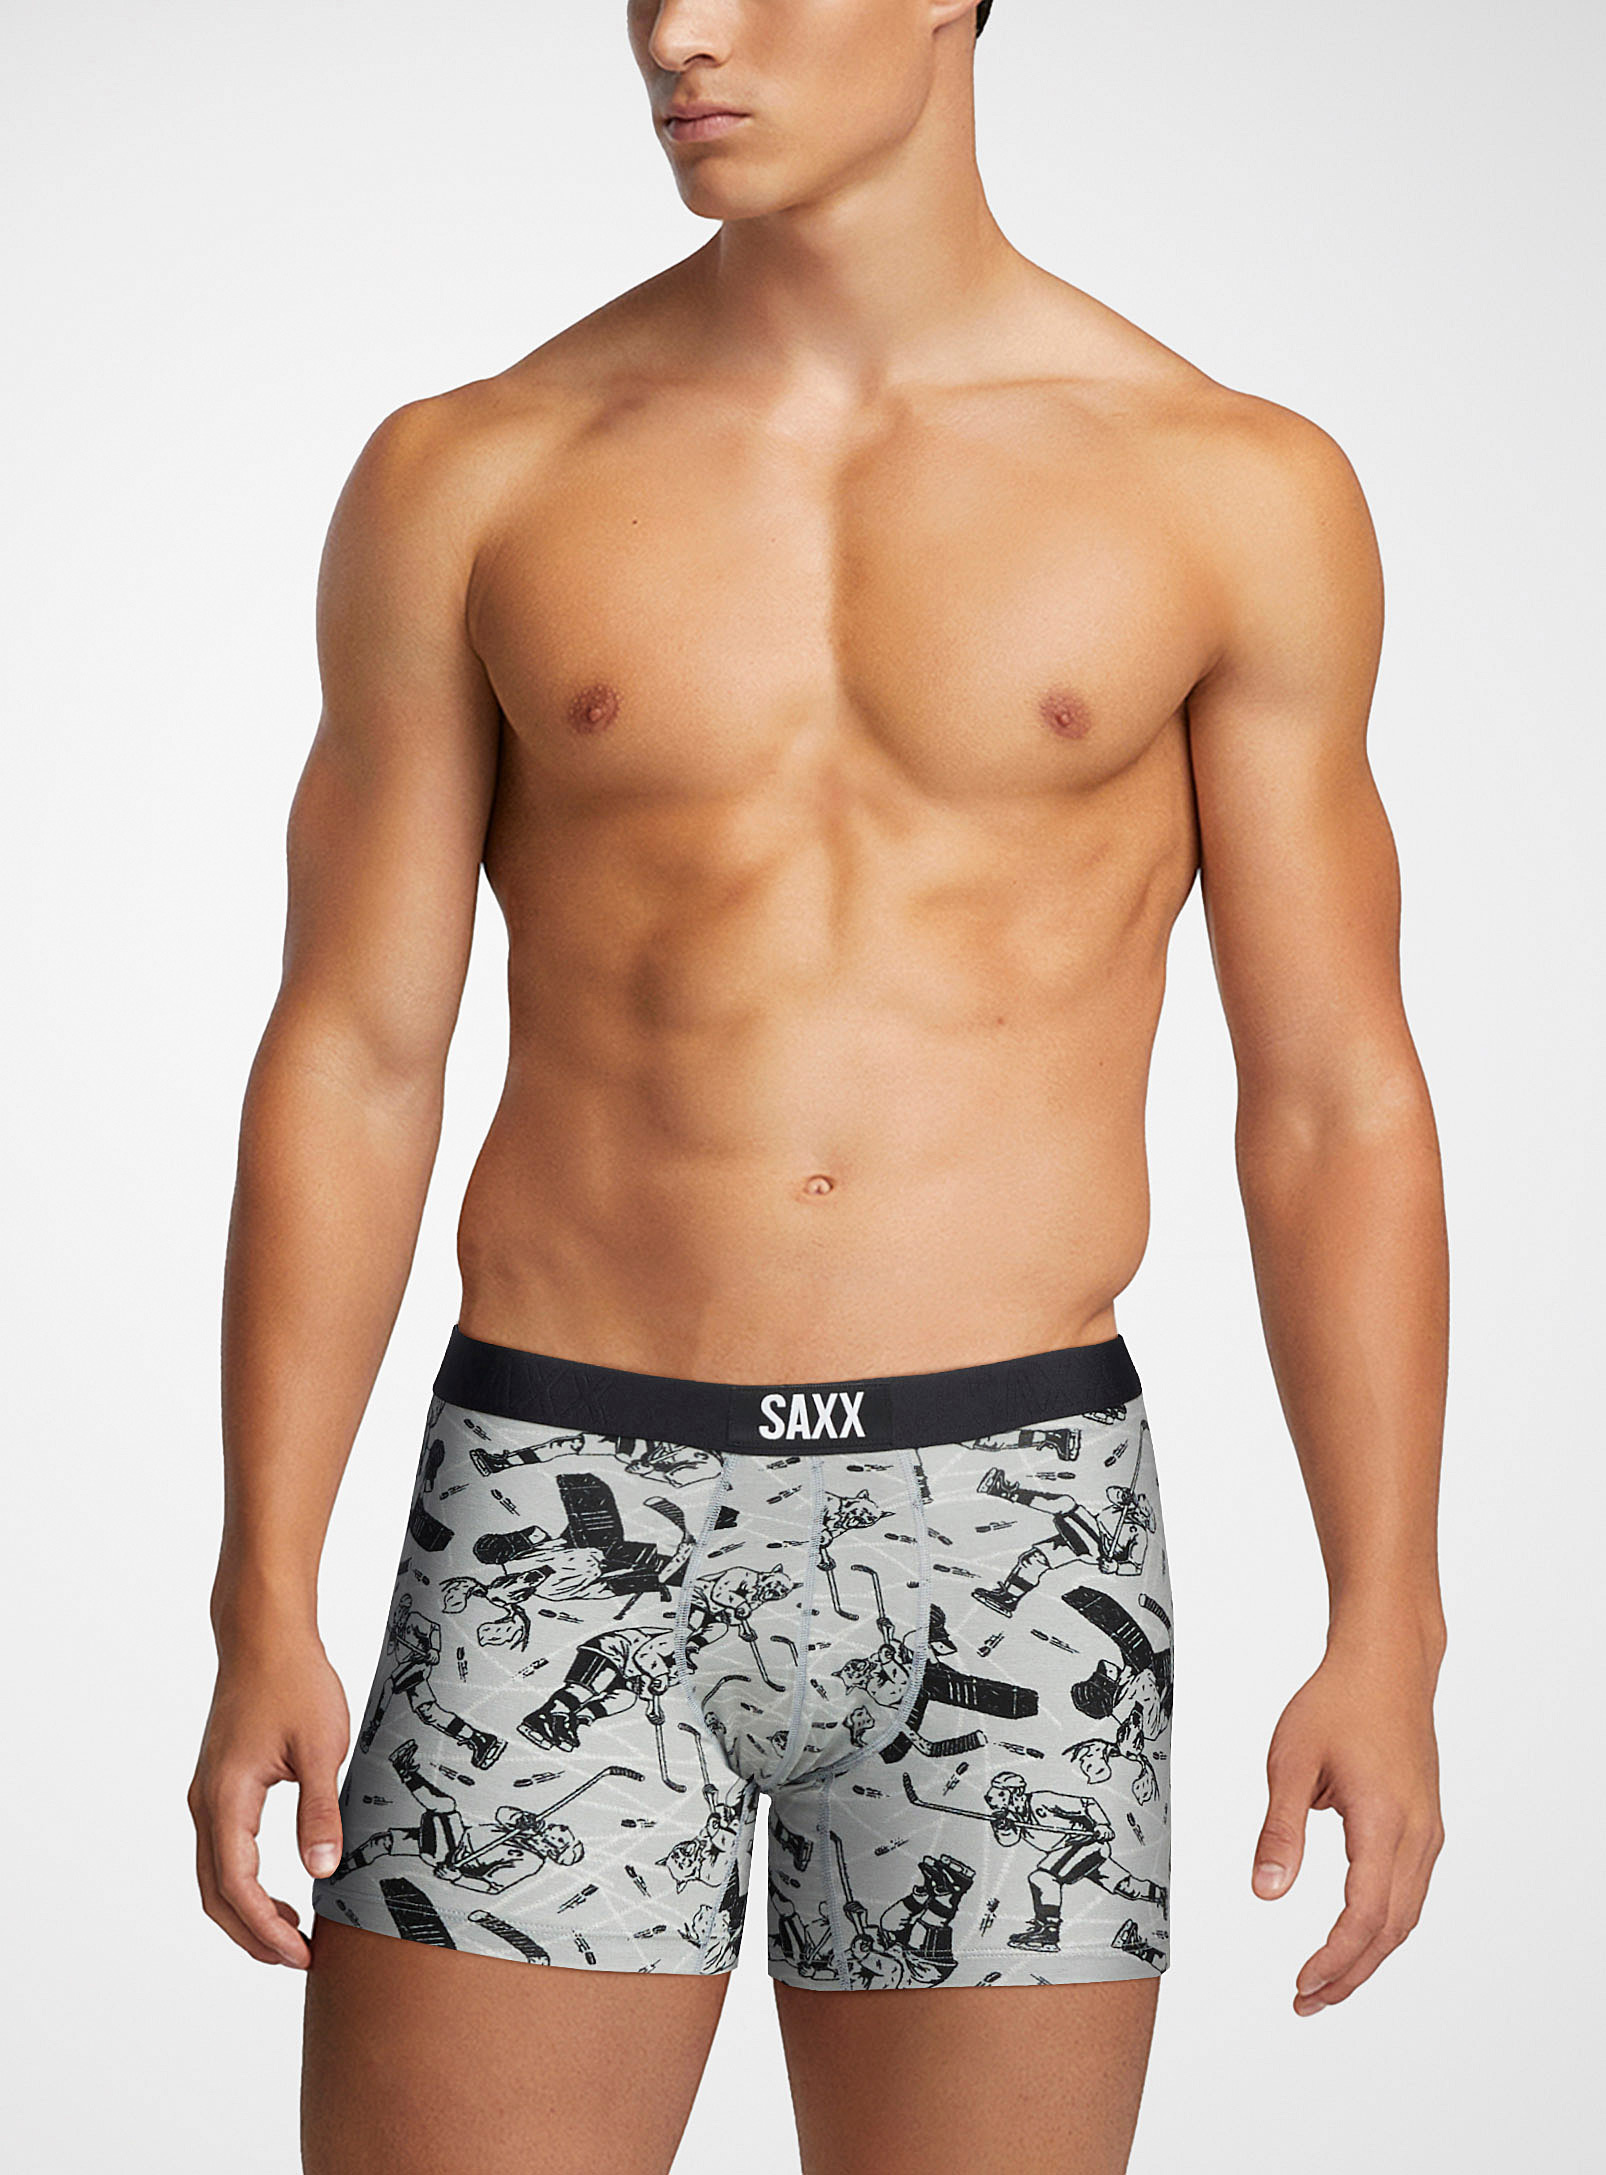 Saxx Gray Underwear for Men for sale